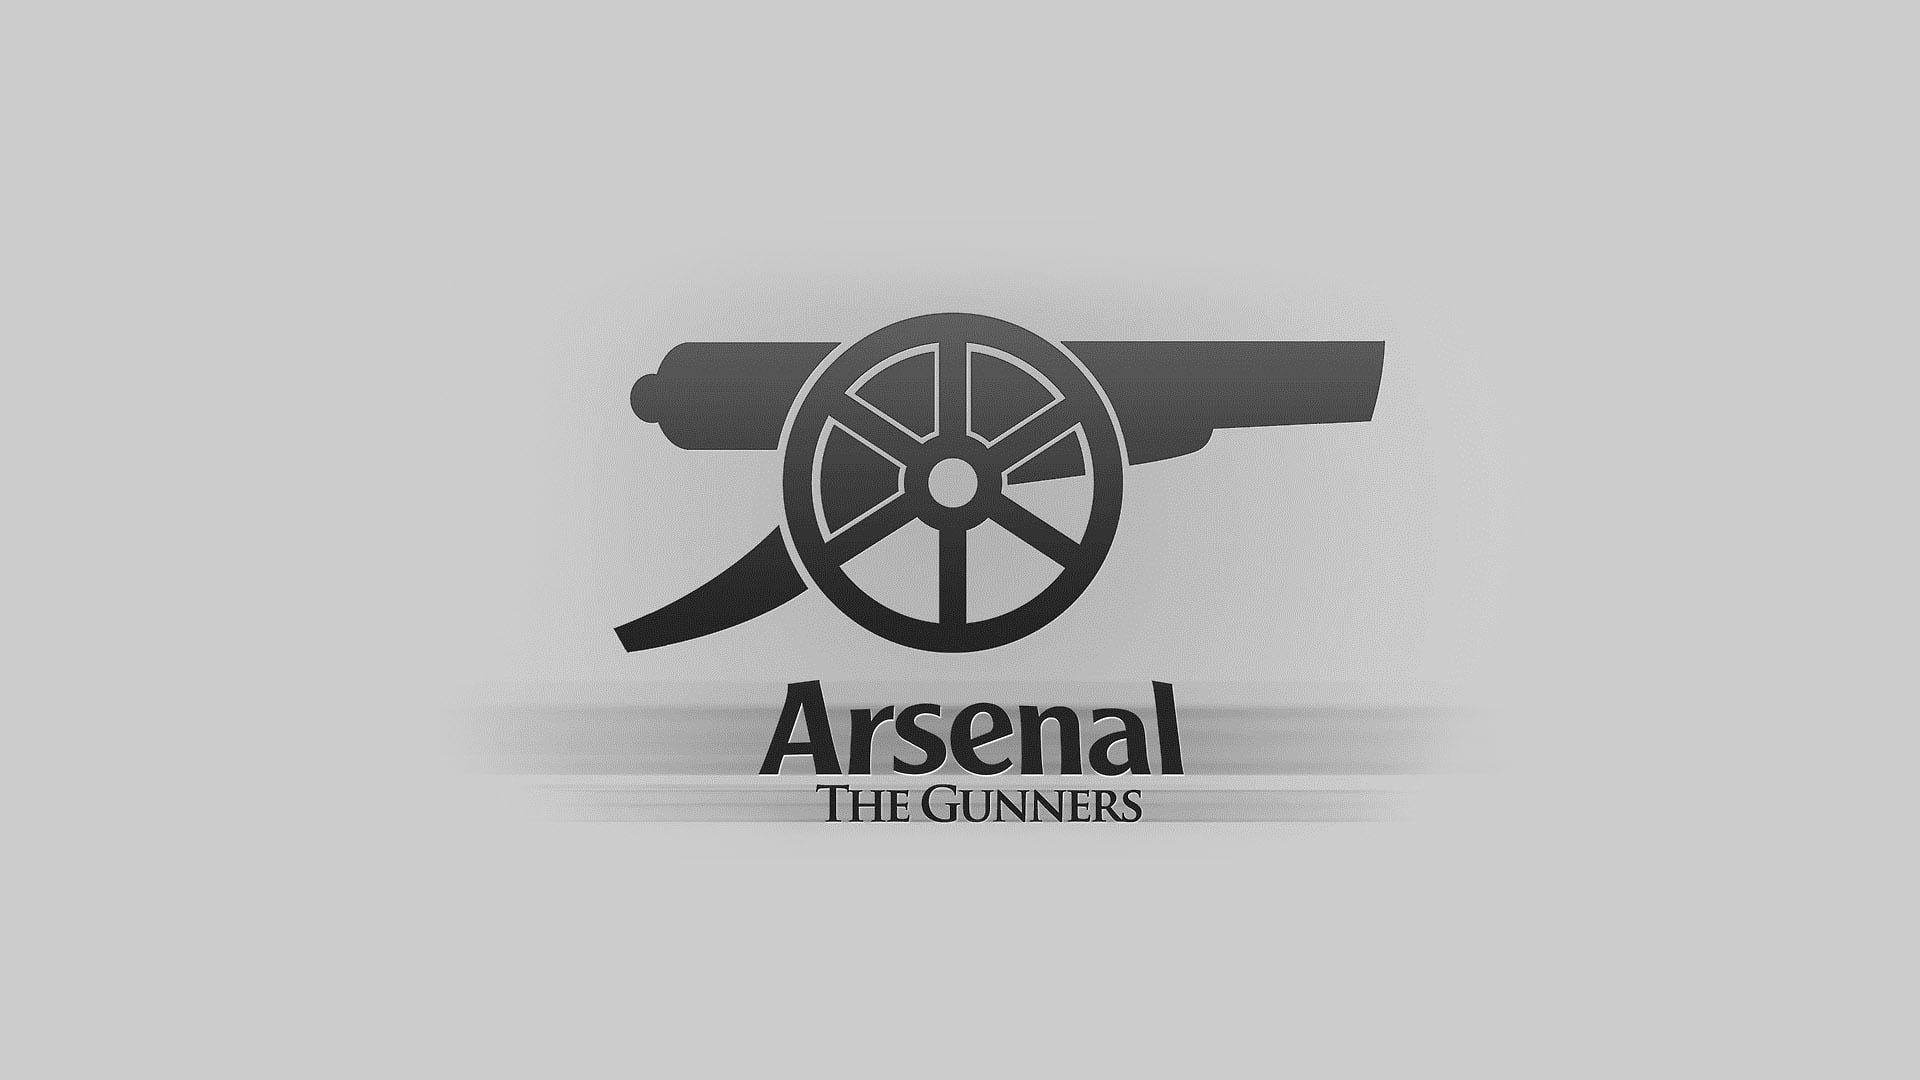 Arsenal The Gunners logo, background, the inscription, emblem